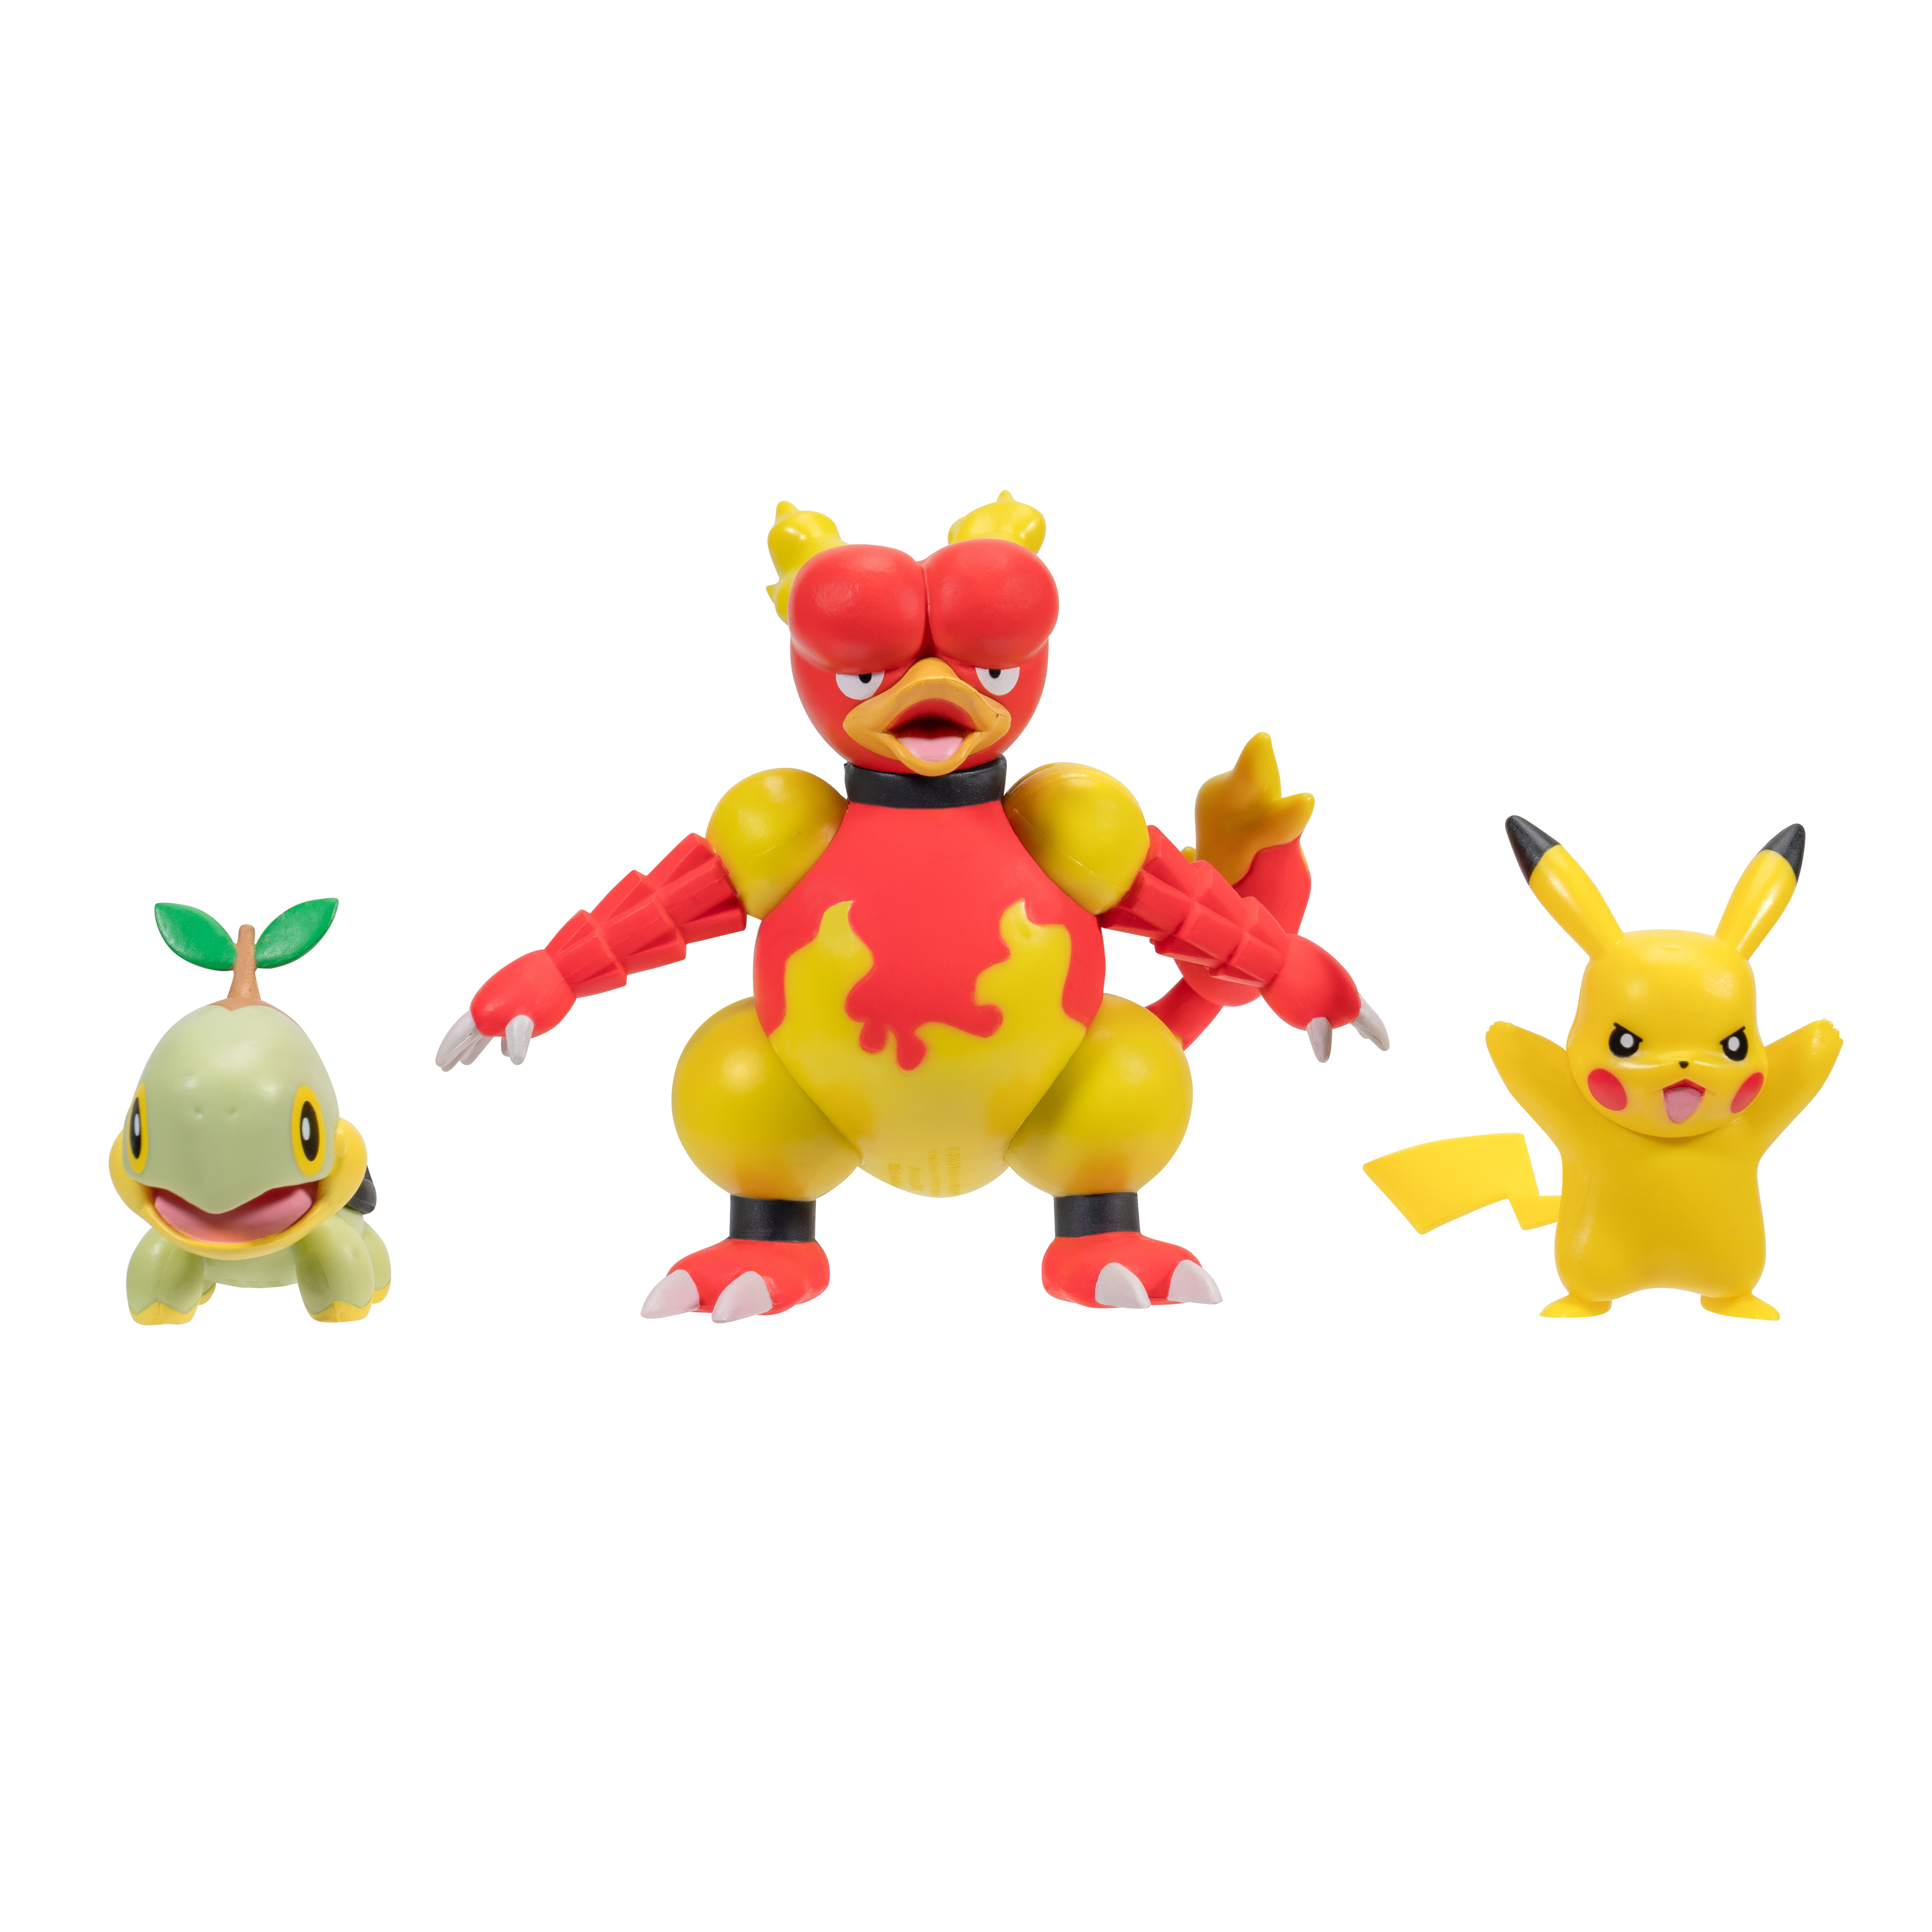 & Pokémon 3er Chelast, Battle - Pack Pikachu#9 - Figur Magmar